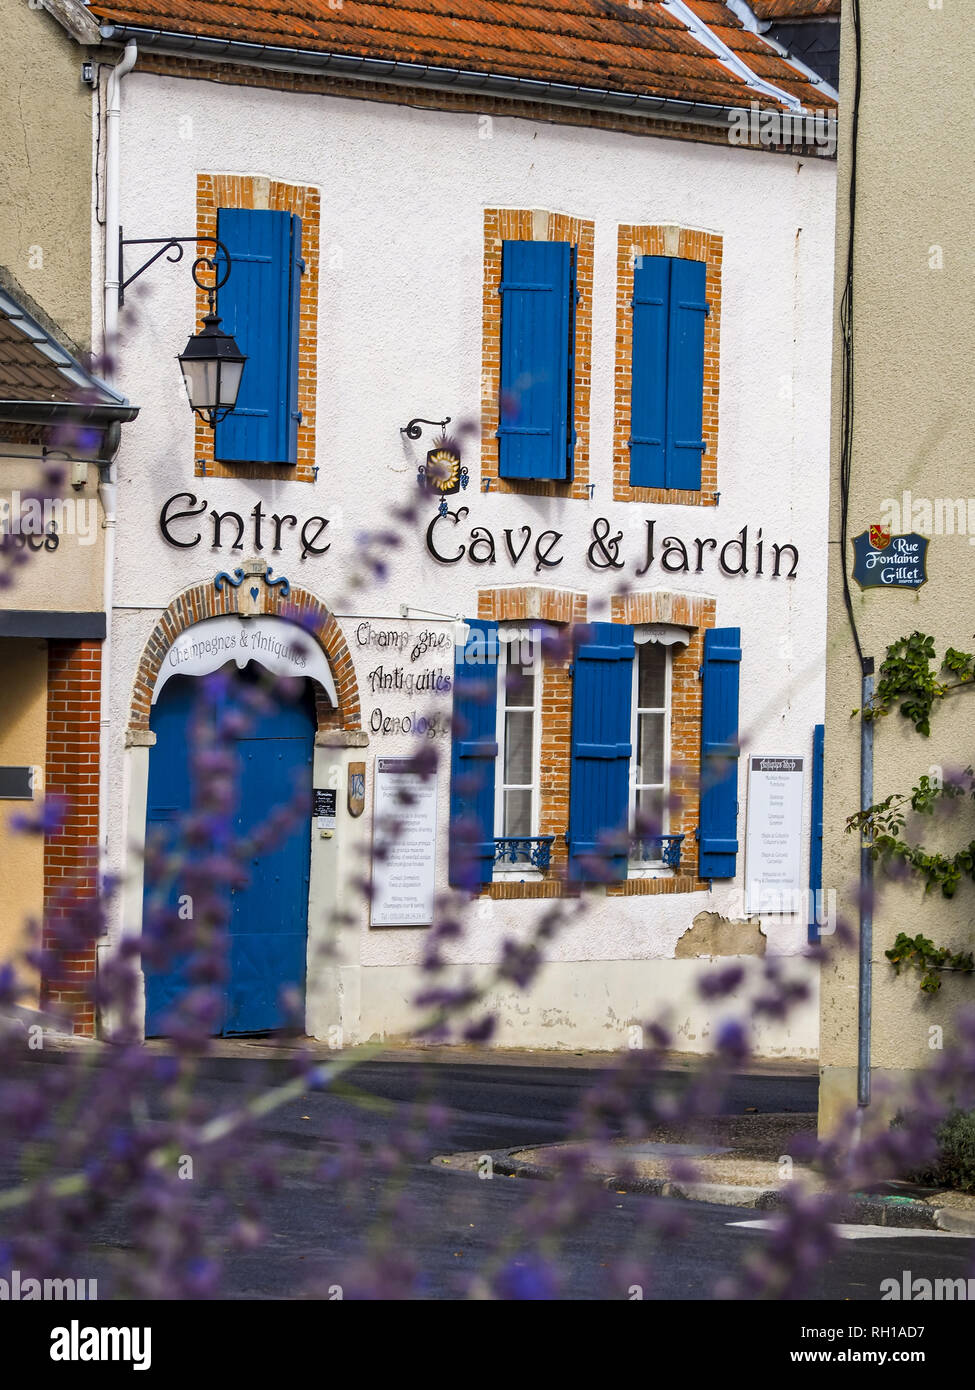 Dom Perignon, Hautvillers, Champagne, Marne, France, Europe Banque D'Images